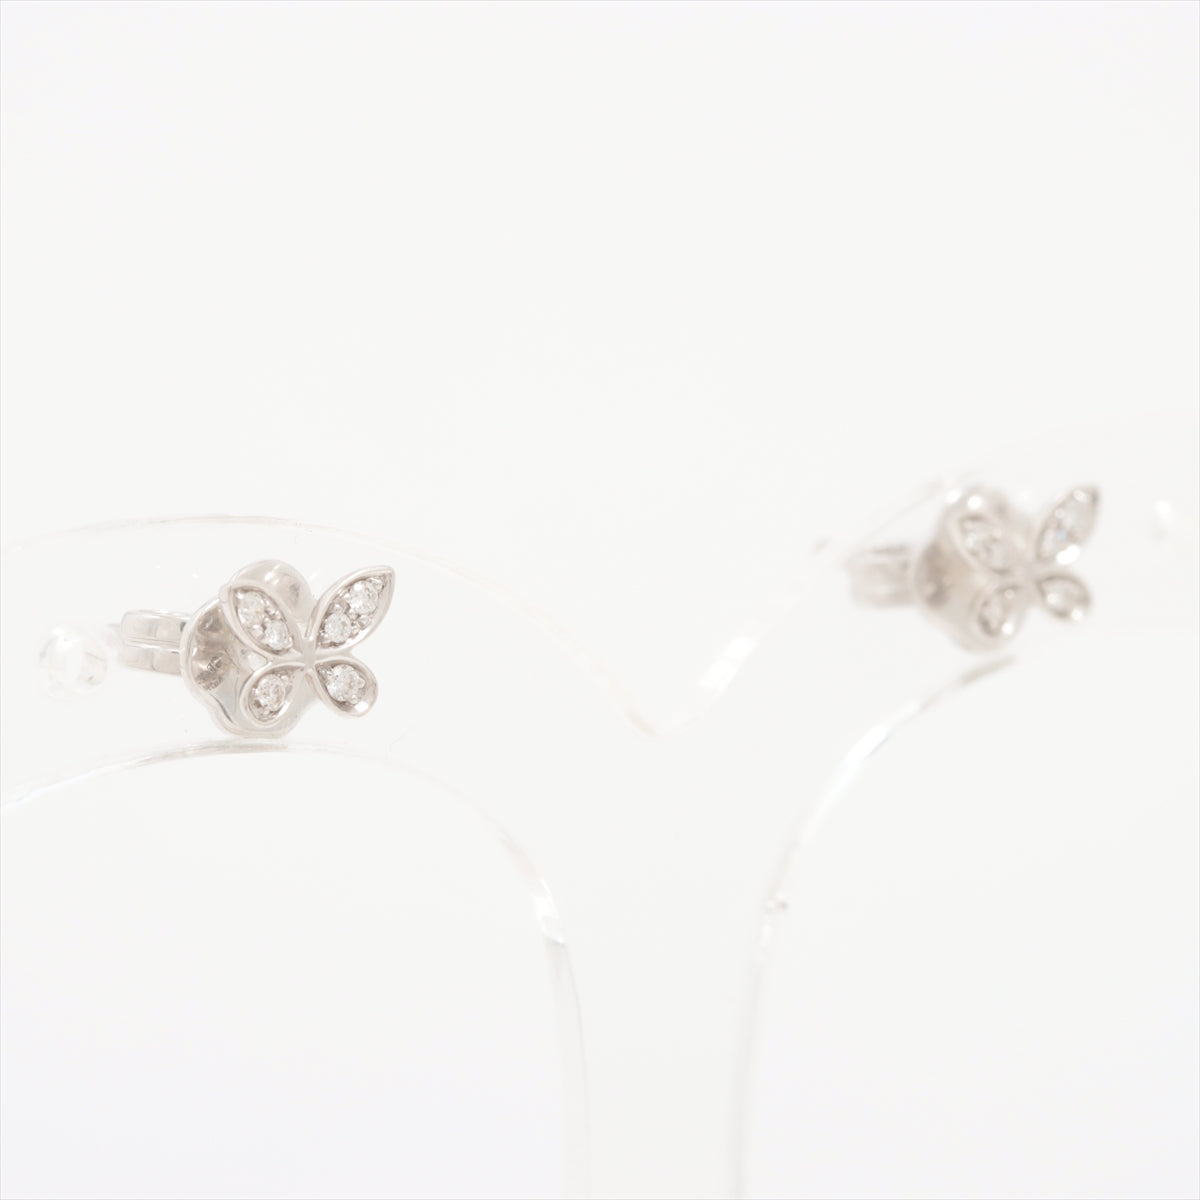 Graff Butterfly Pavé diamond Piercing jewelry 750(WG) 1.8g